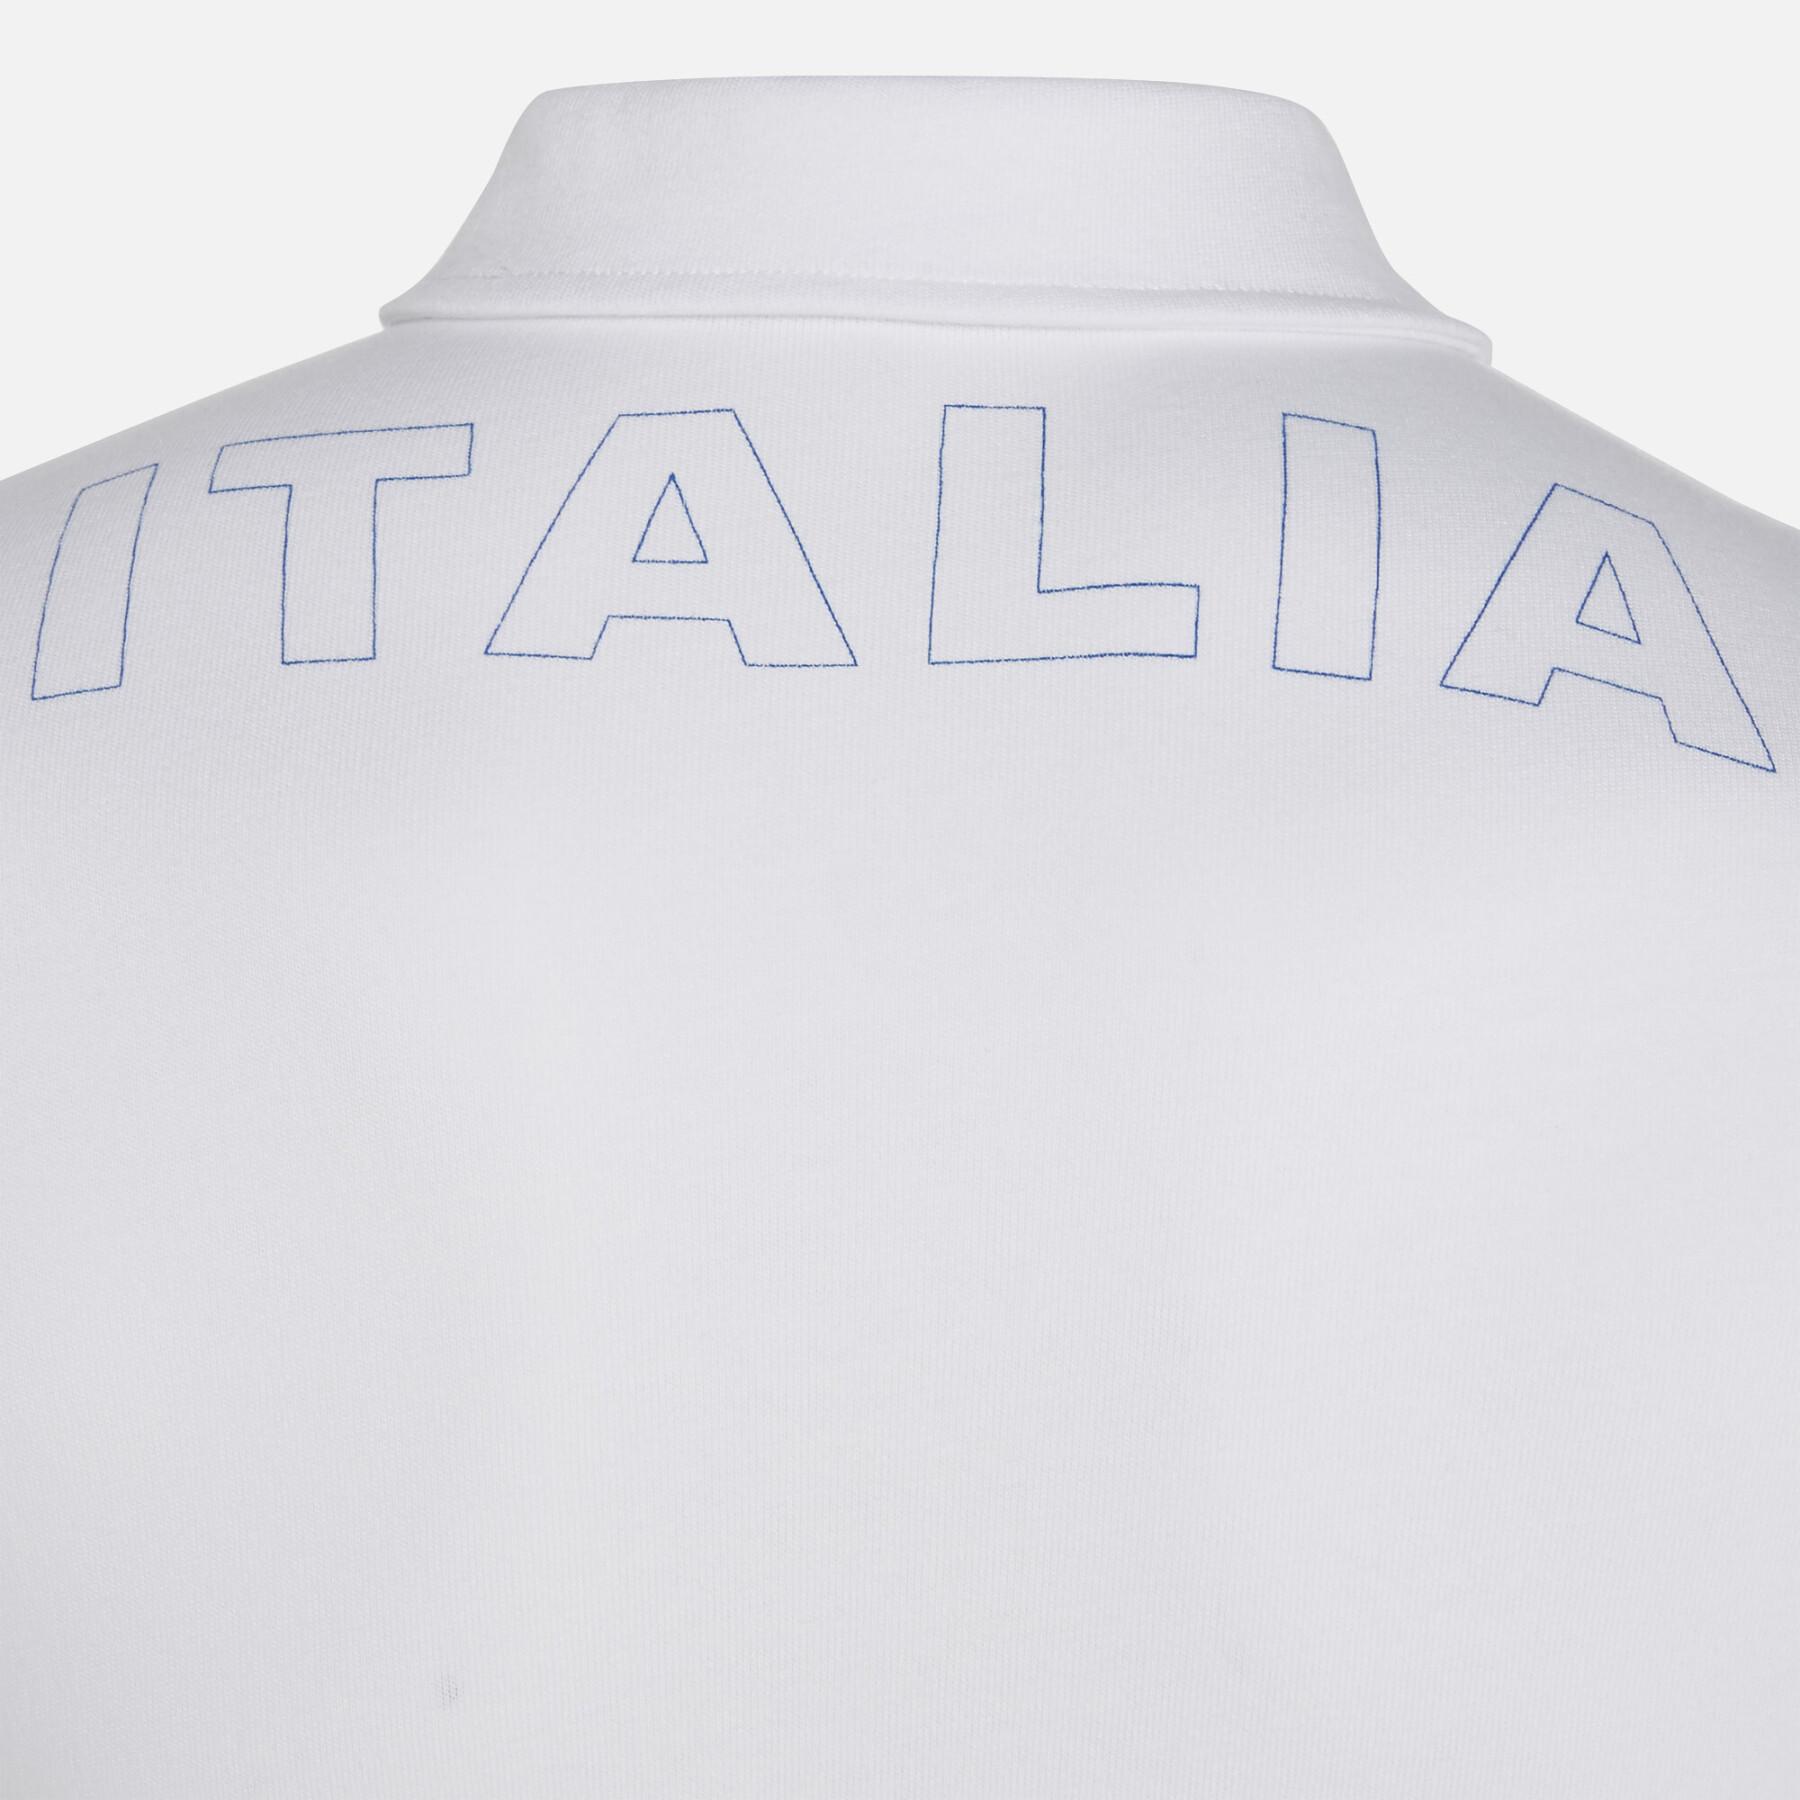 Koszulka kibica Italie 2019/20